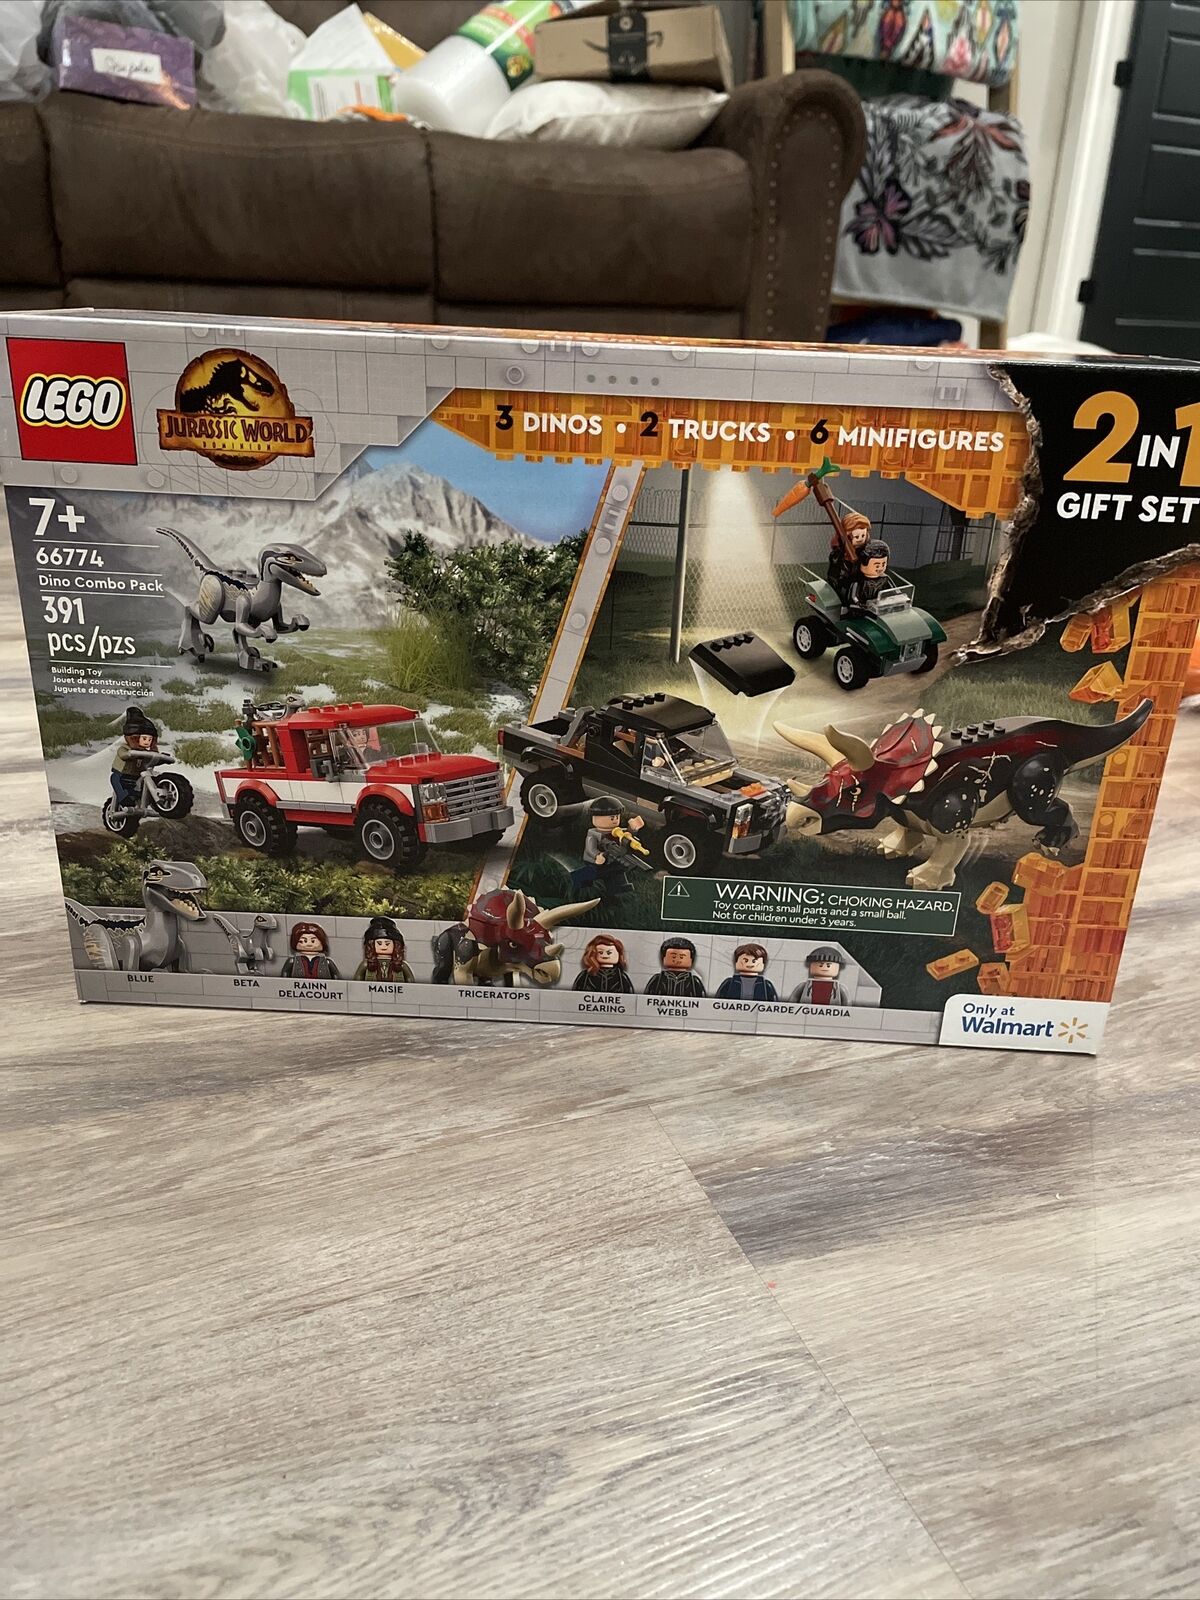 LEGO 66774 Jurassic World Dino Combo Pack 2 in 1 Triceratops and Velociraptor